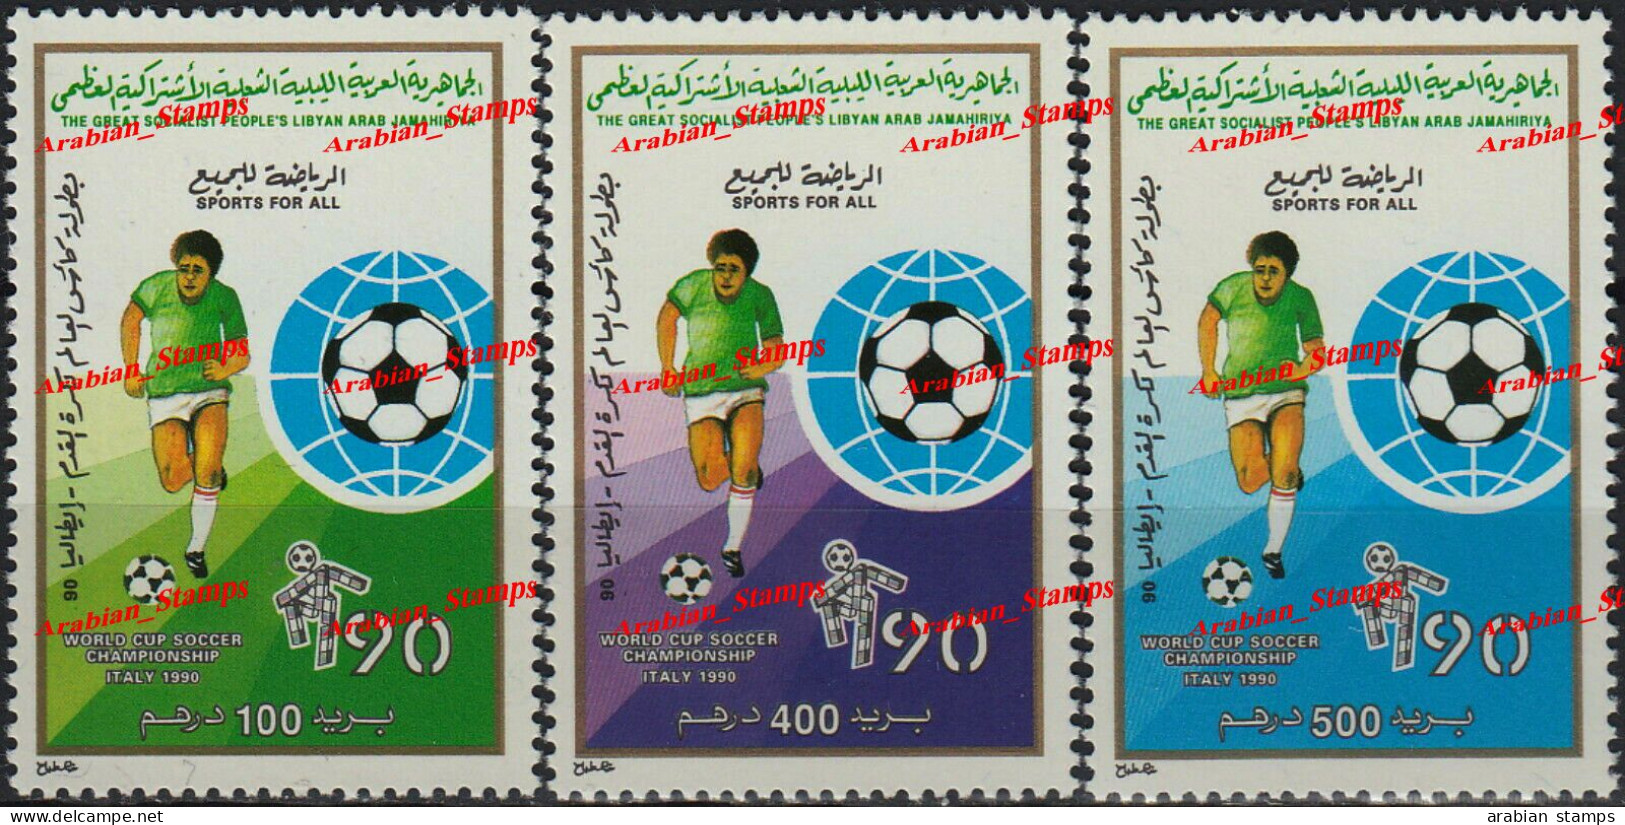 LIBYA 1990 SOCCER FOOTBALL WORLD CUP COUPE DU MONDE ITALY ITALIE SET MNH - Libia